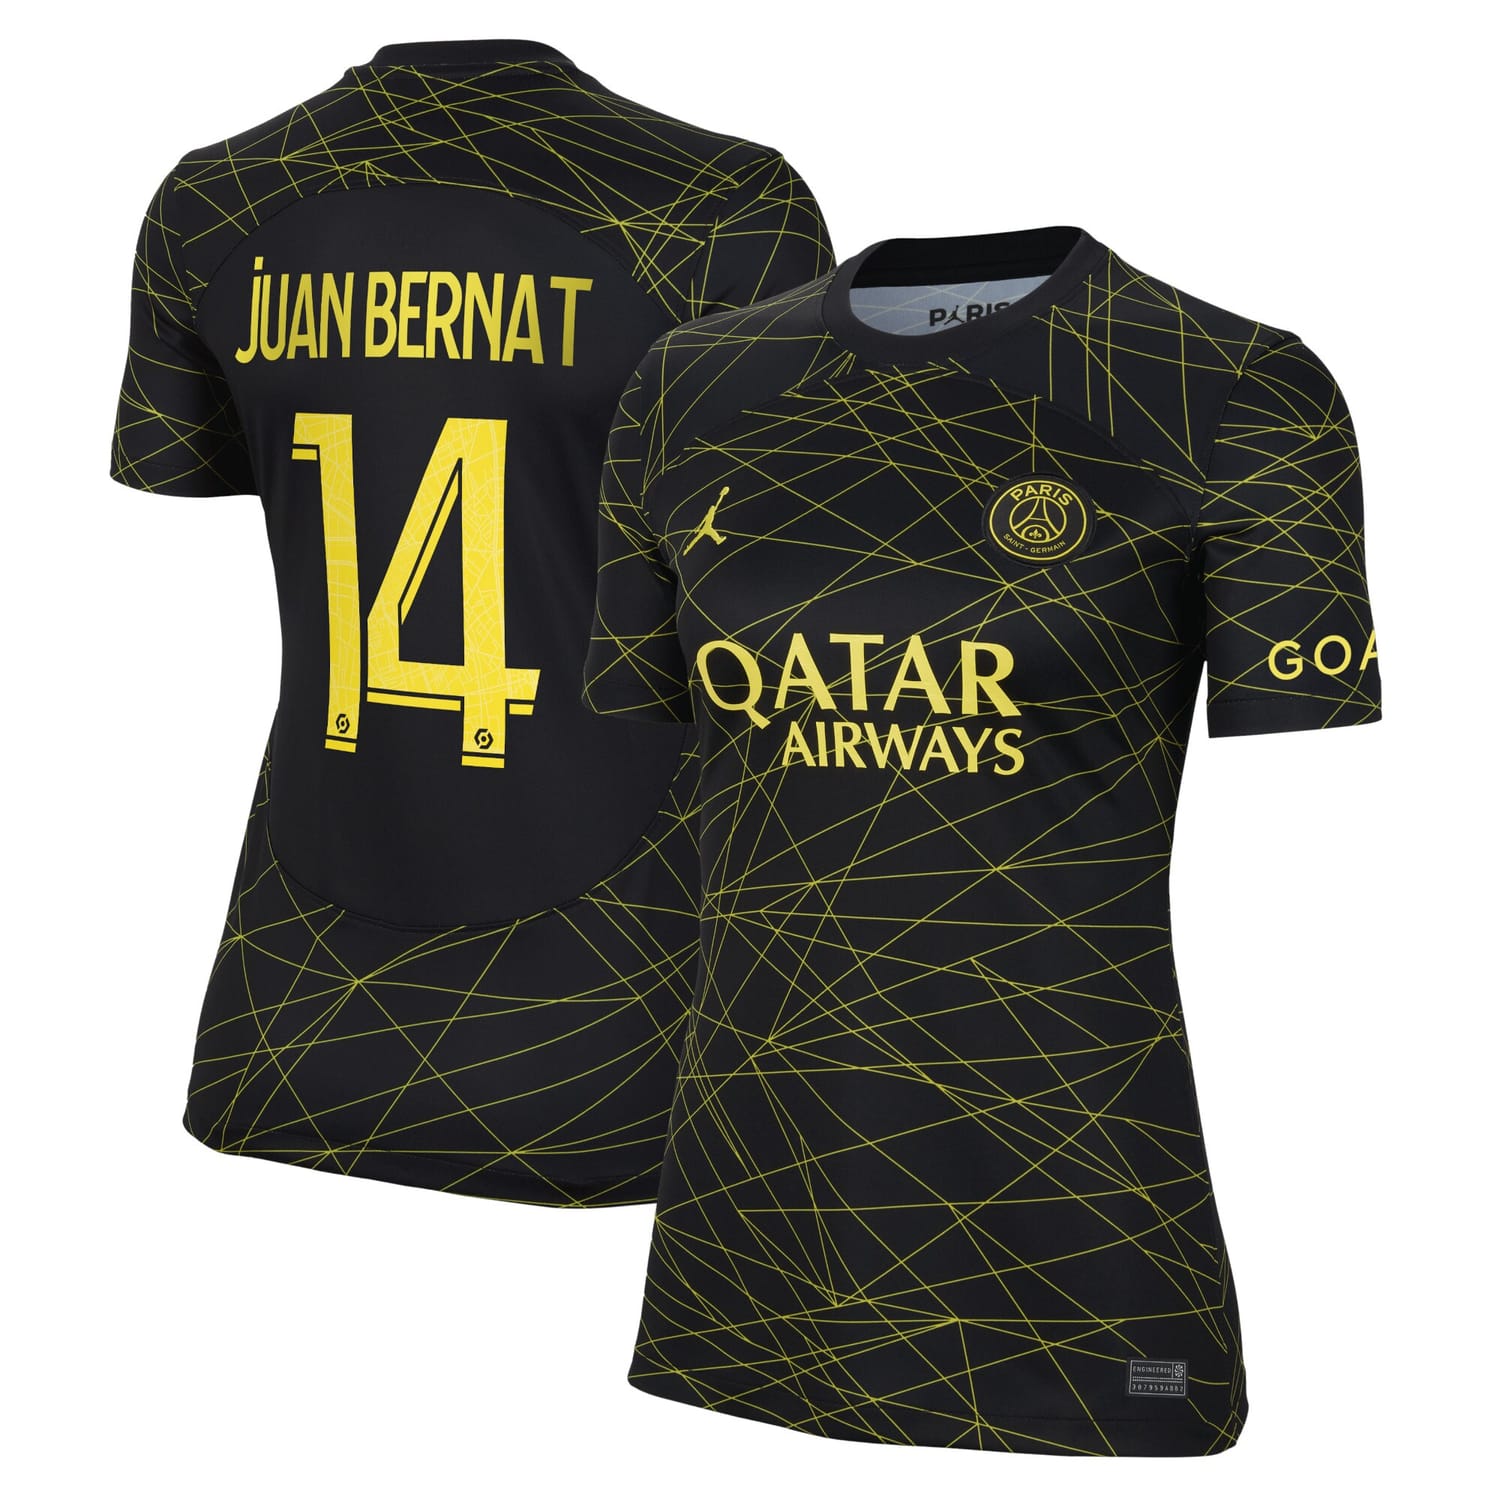 Ligue 1 Paris Saint-Germain Fourth Jersey Shirt 2022-23 player Juan Bernat 14 printing for Women